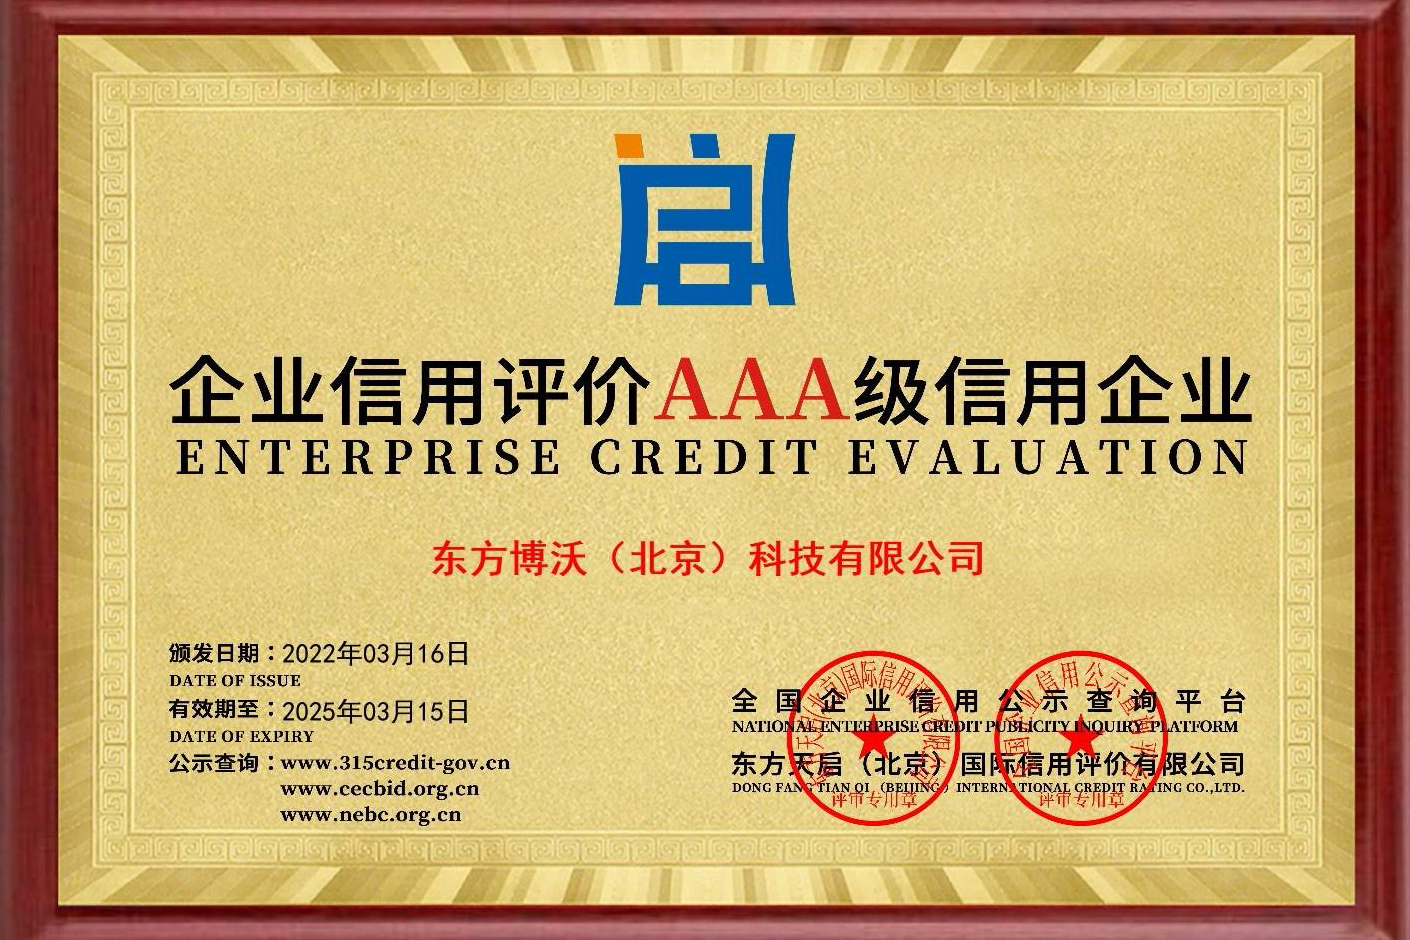 AAA credit enterprise ce